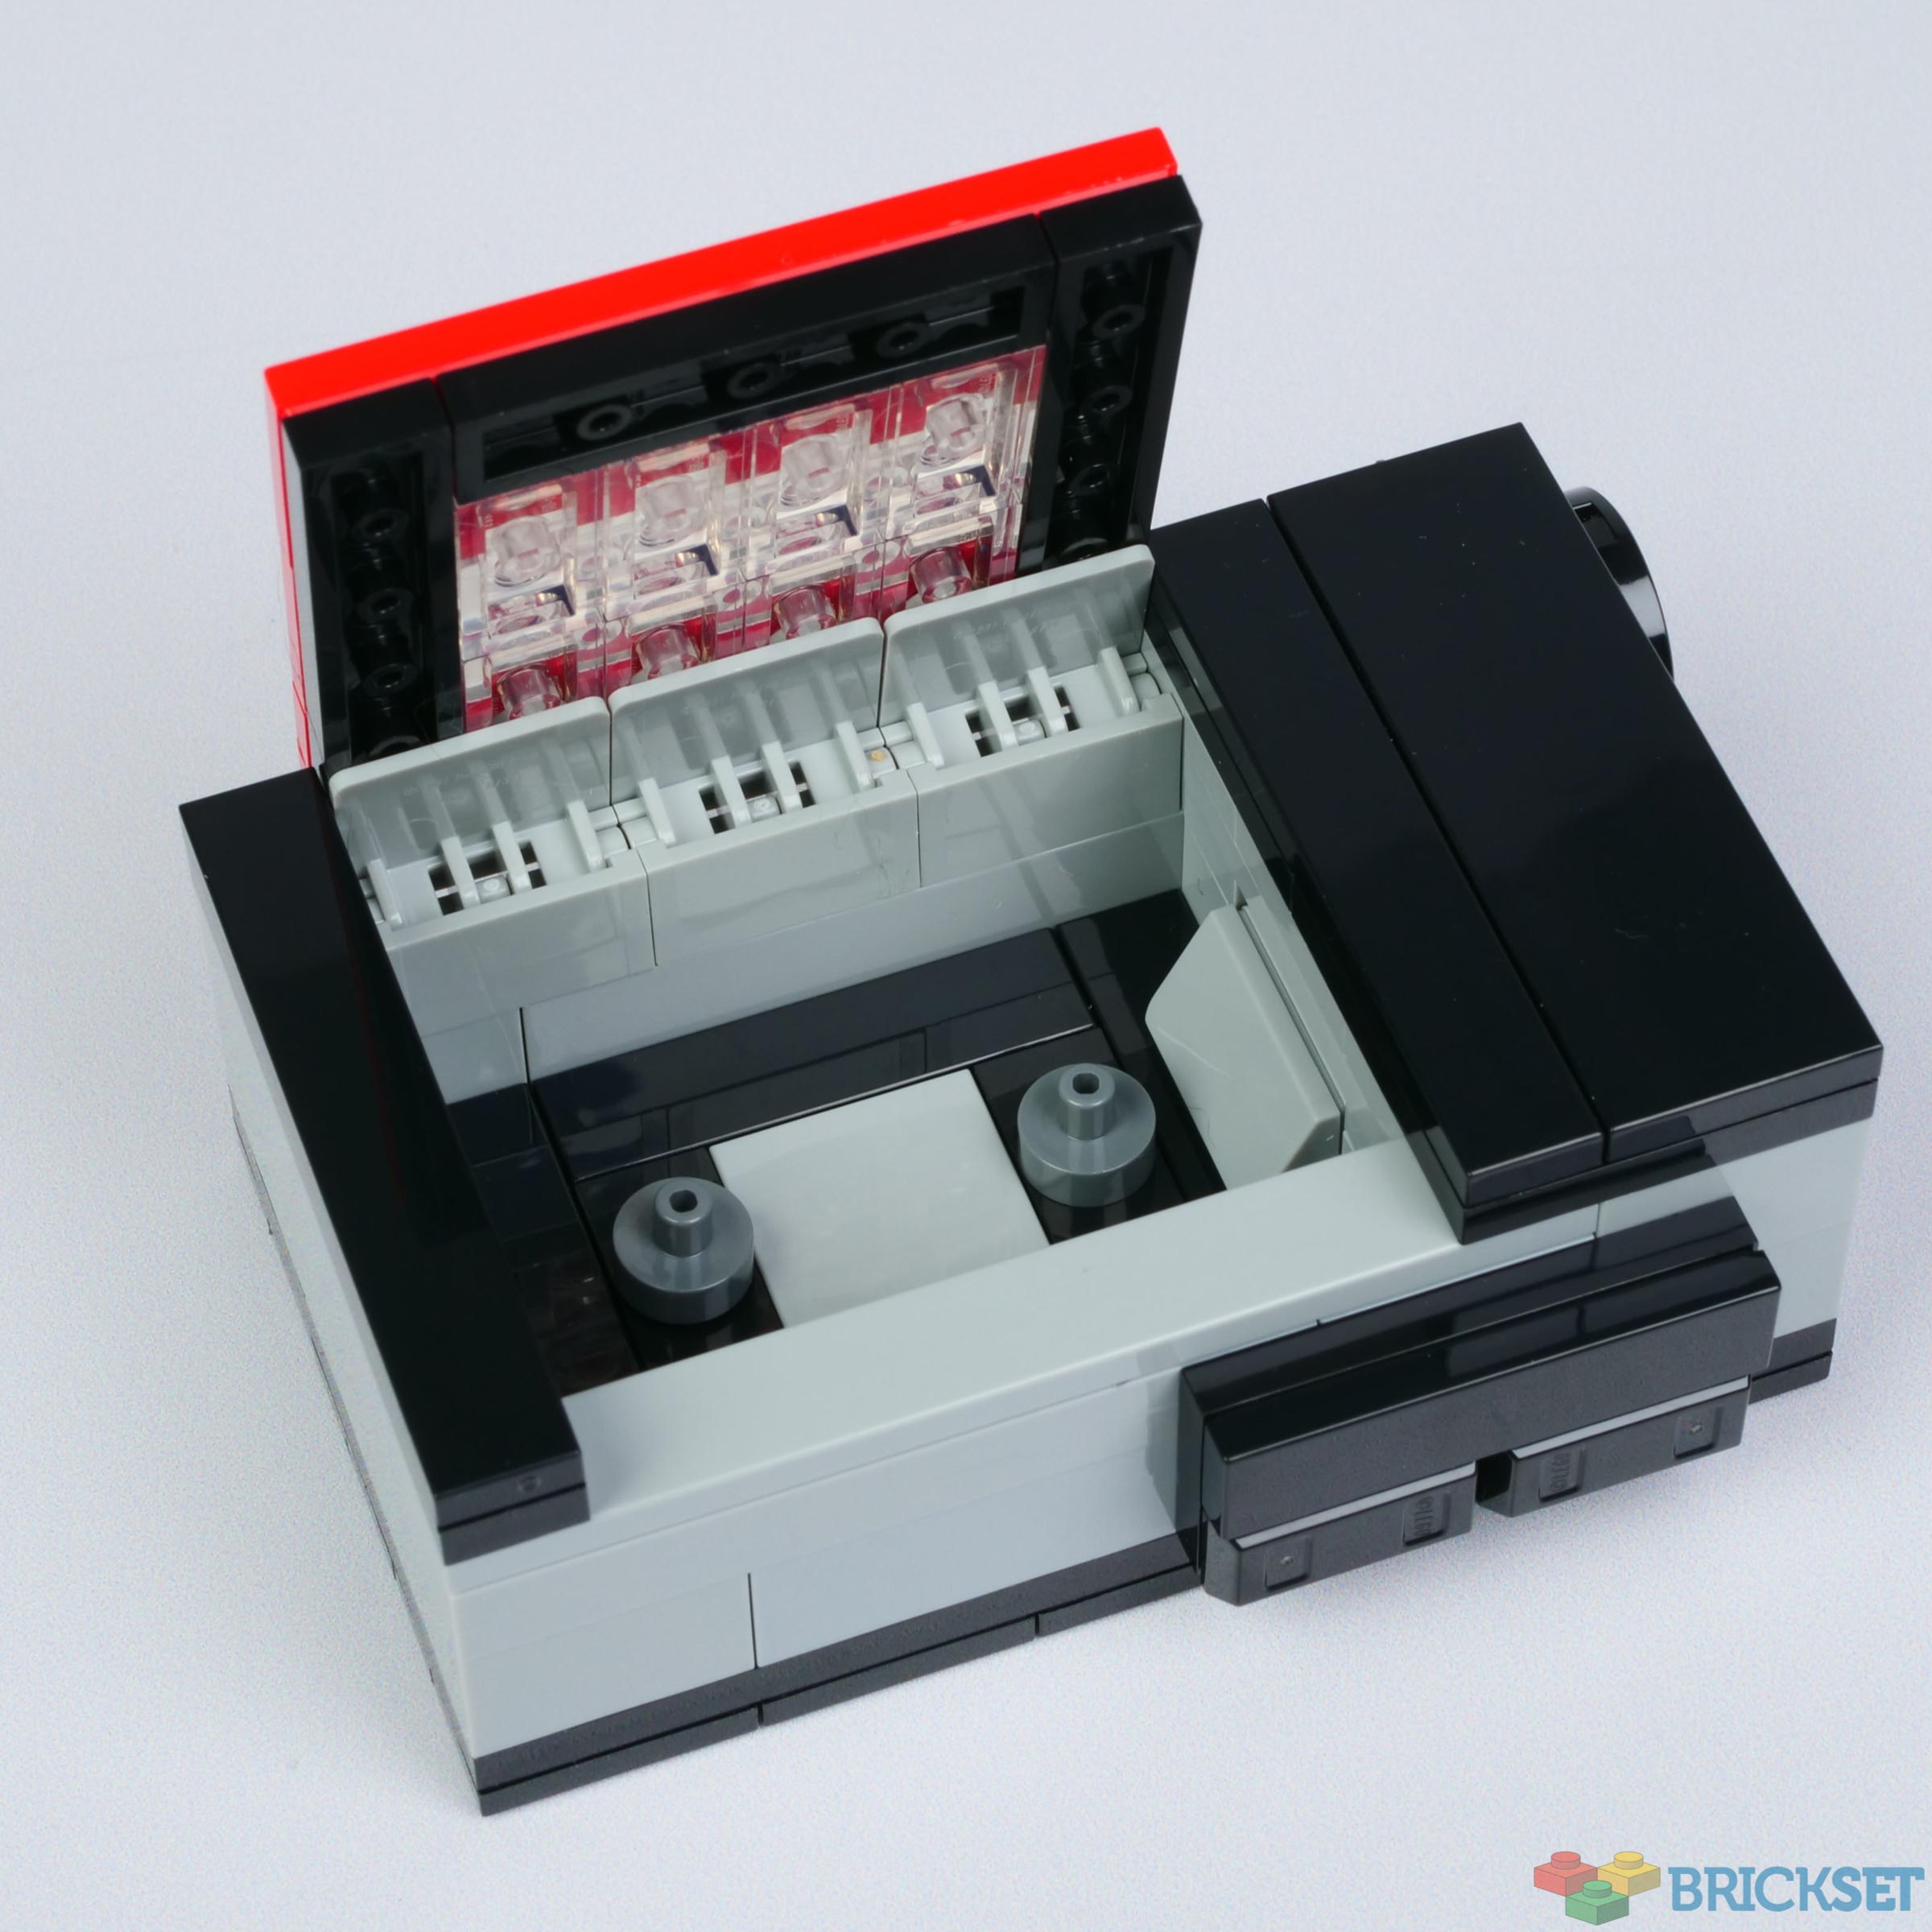 LEGO IDEAS - Cassette Player